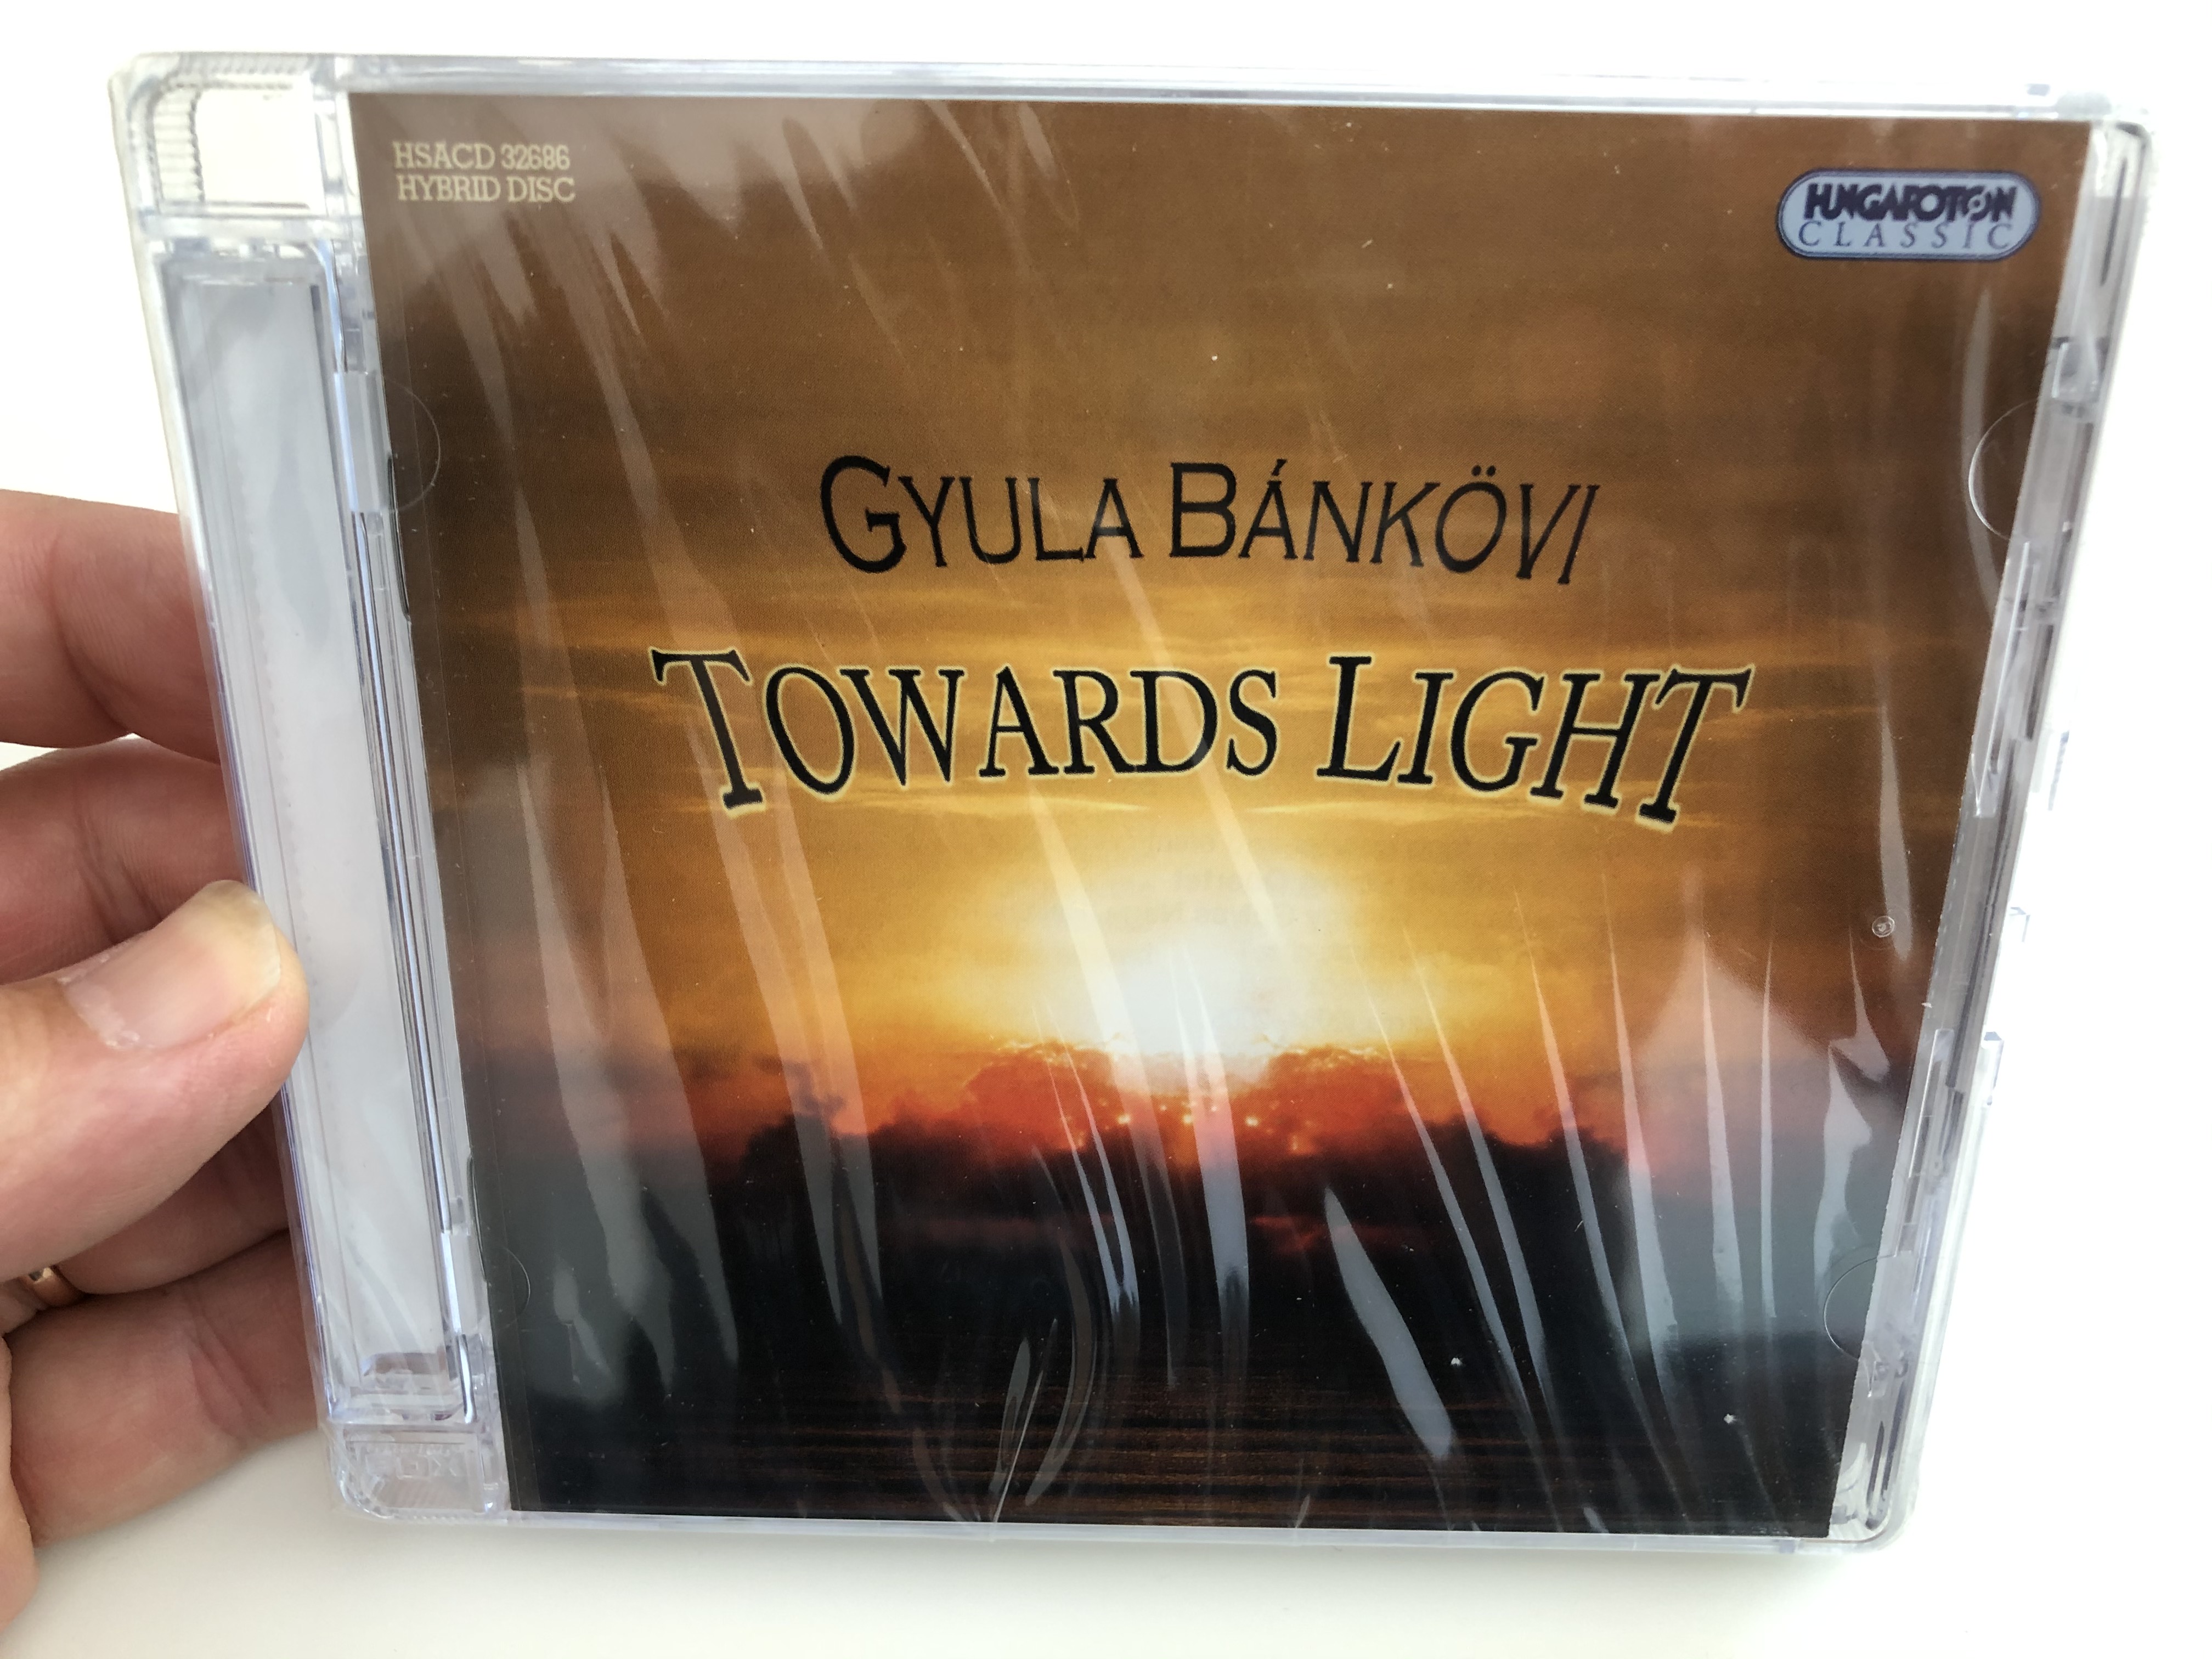 gyula-b-nk-vi-towards-light-hungaroton-classic-audio-cd-2011-hsacd-32686-1-.jpg